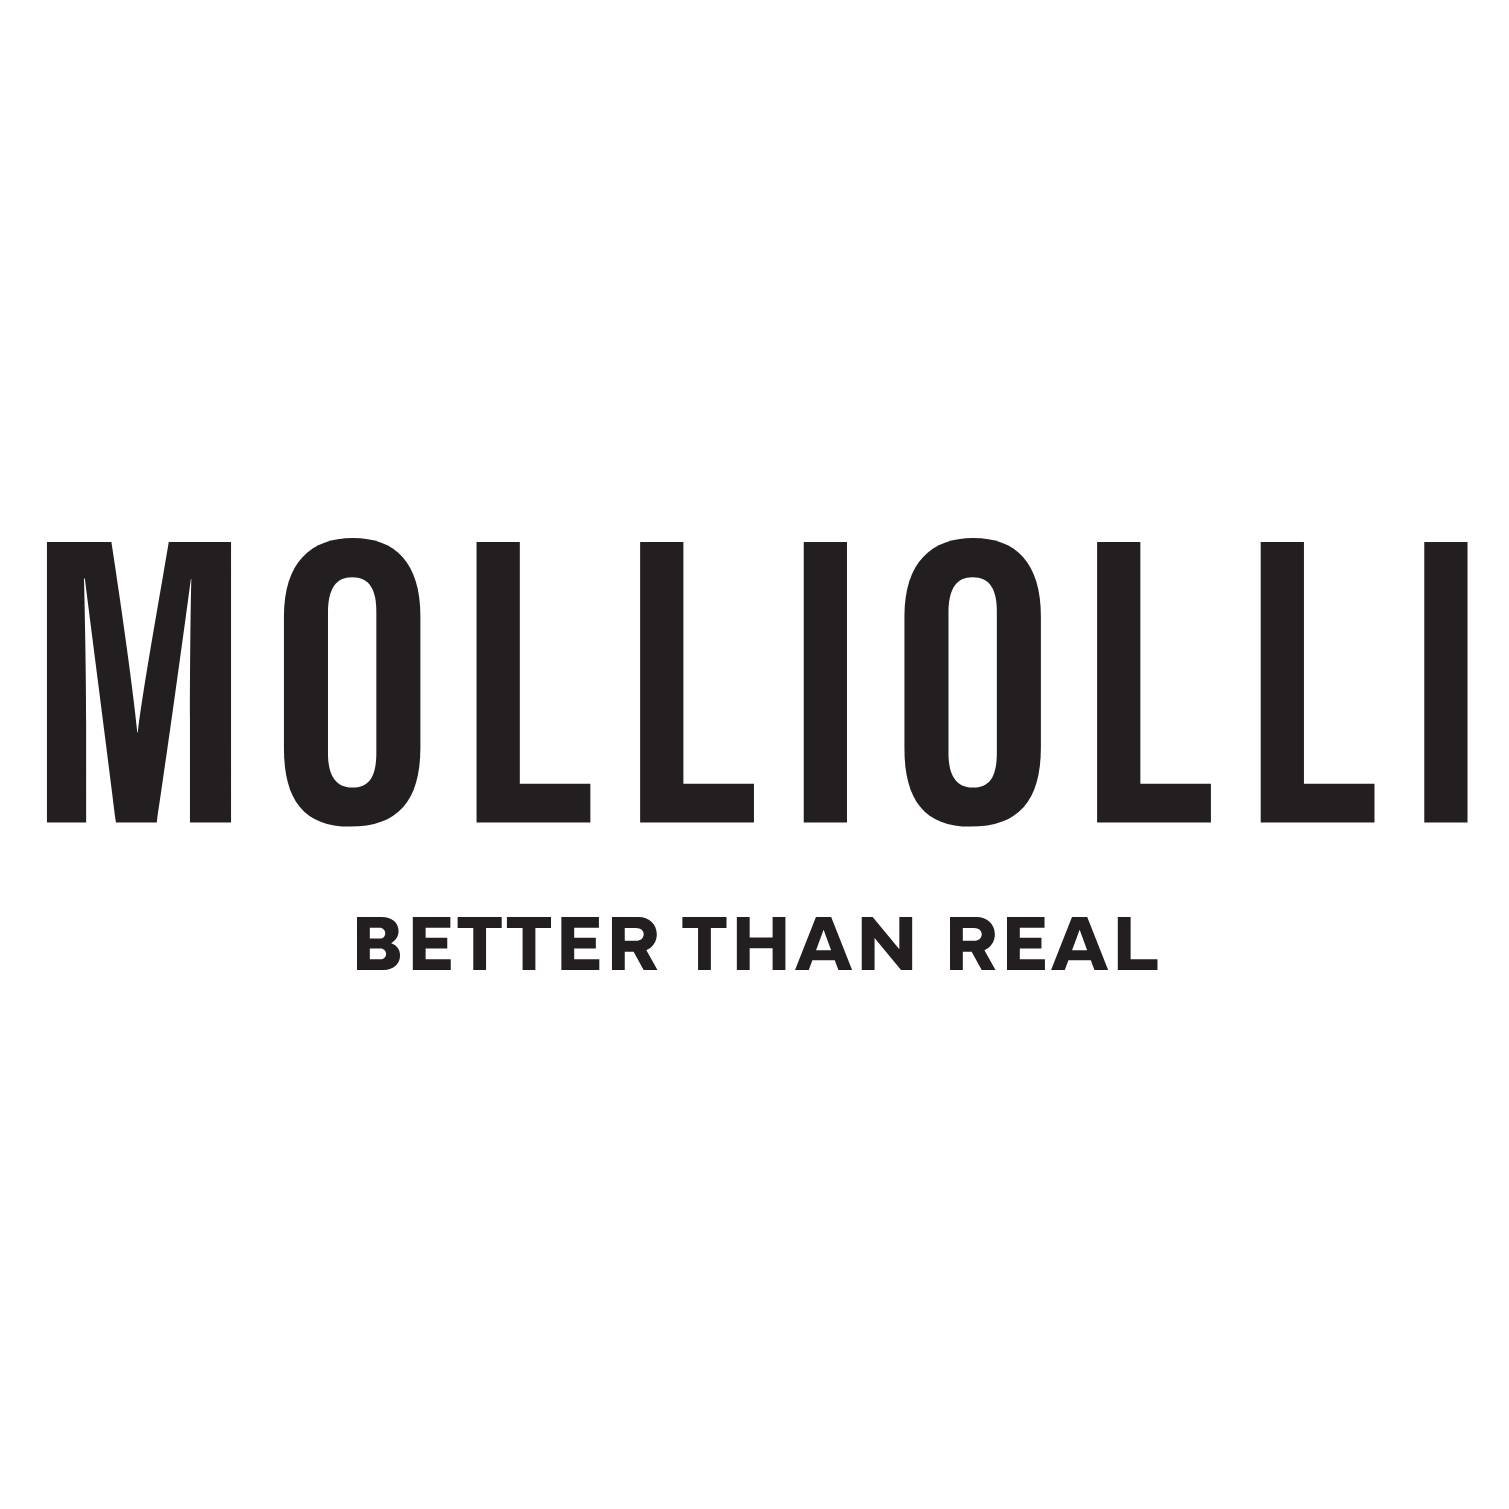 MOLLIOLLI - NEW LOGO-ai.jpg